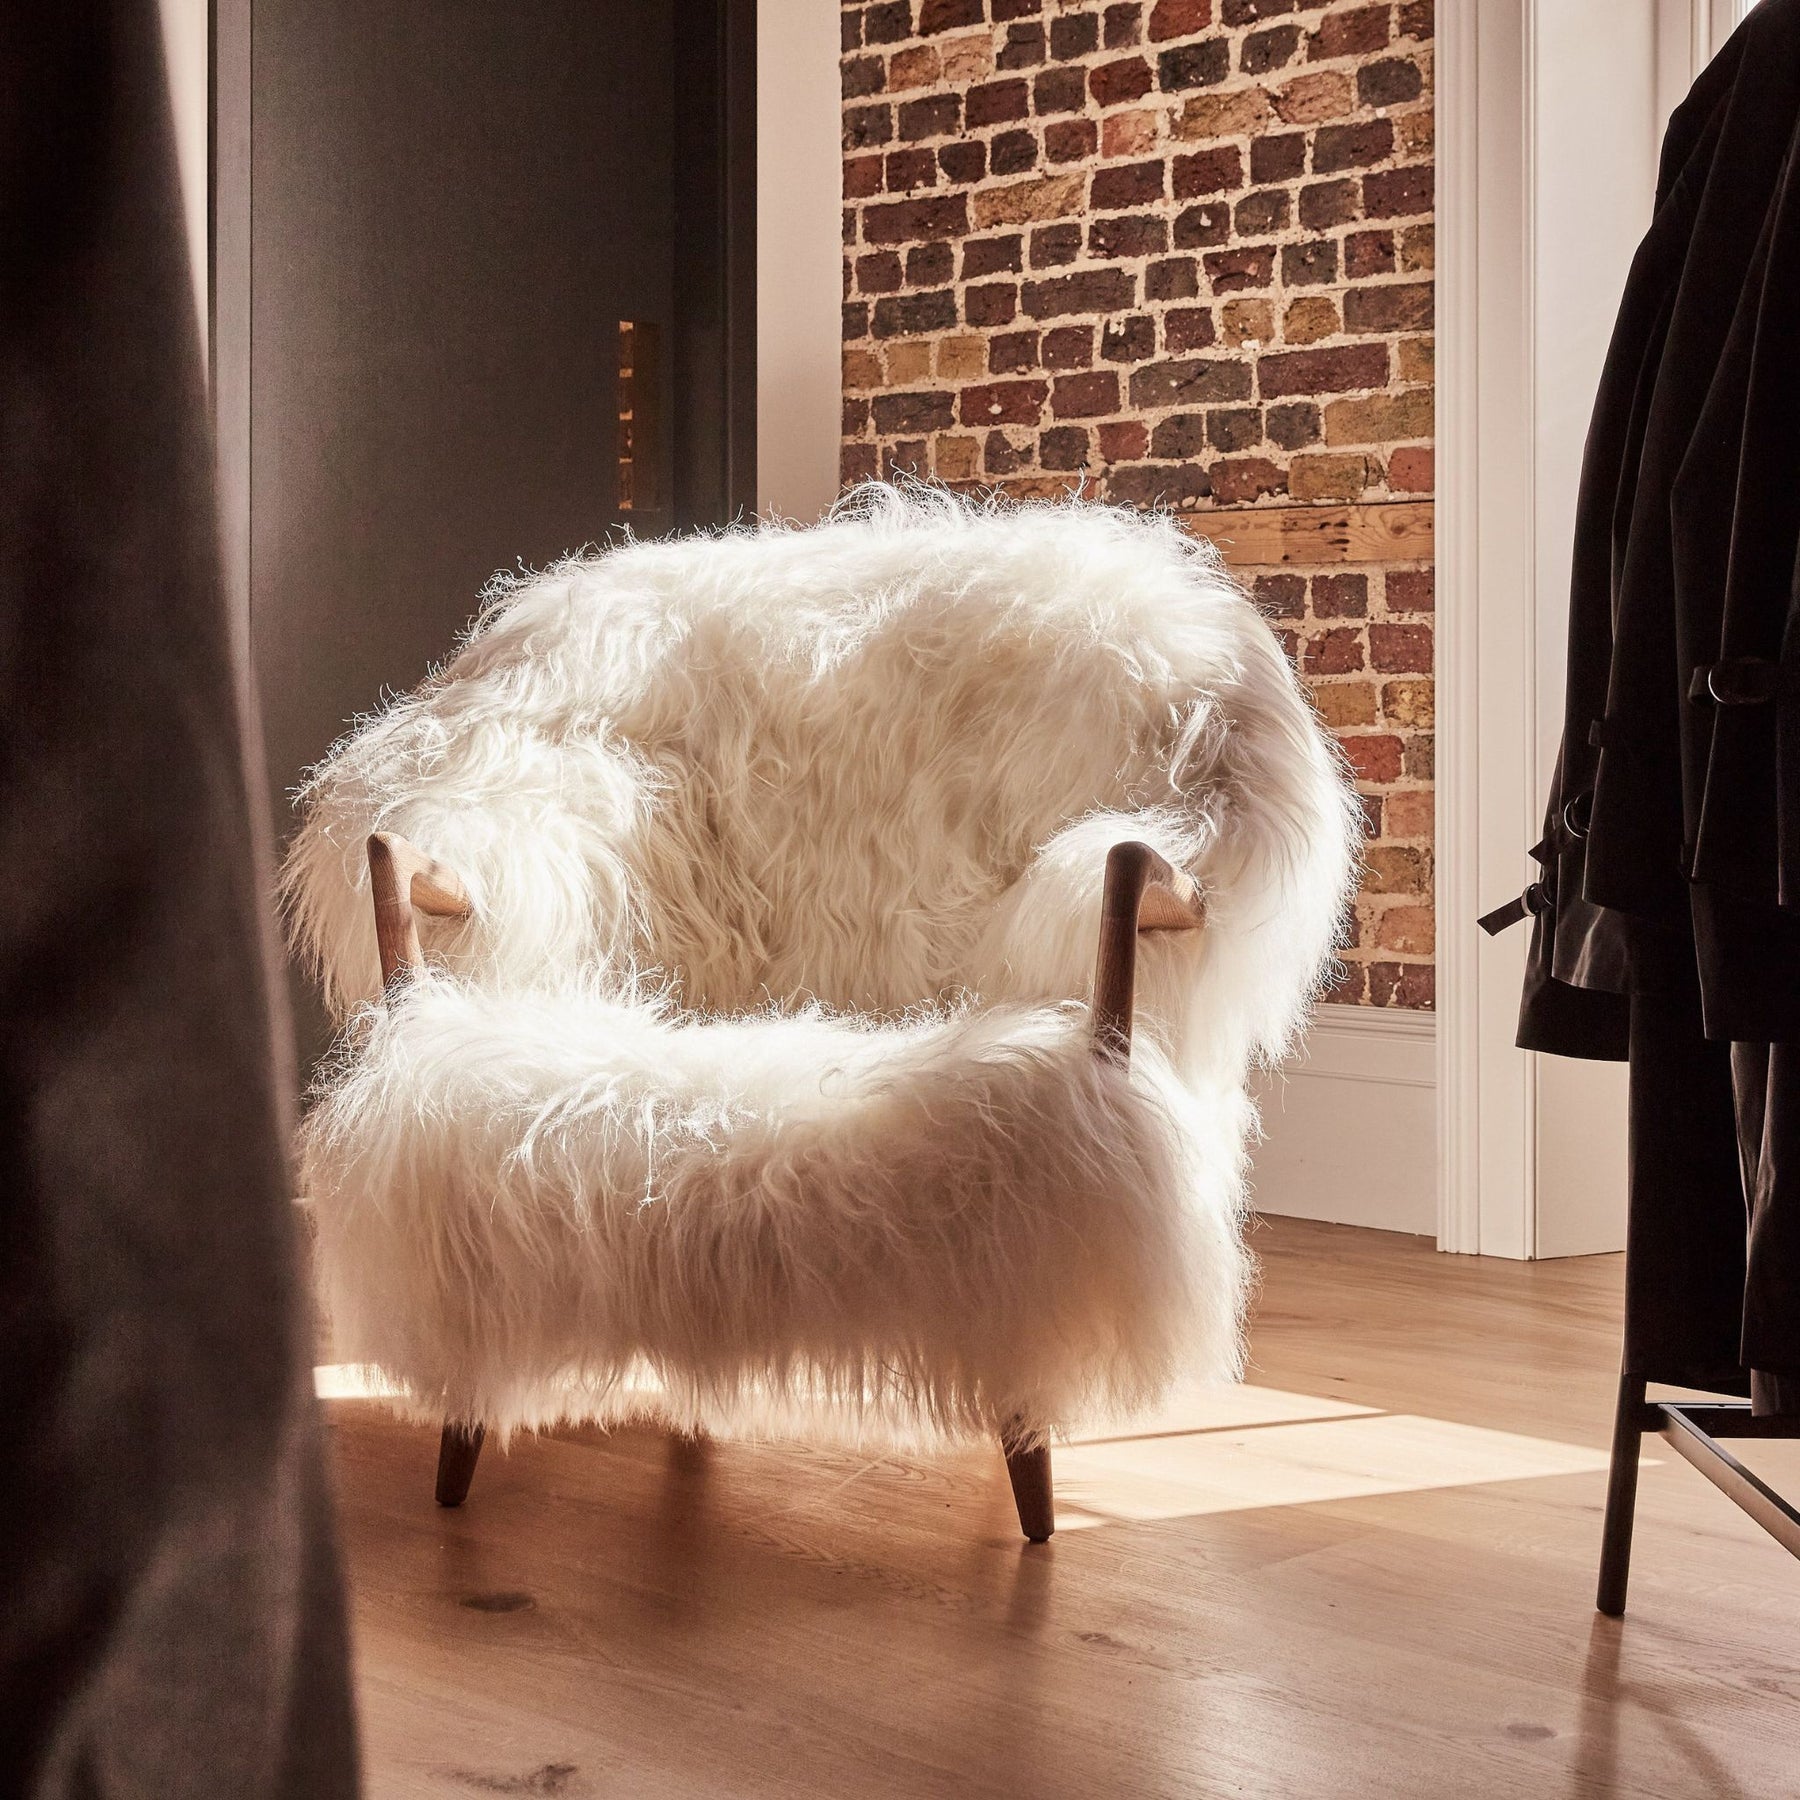 Eikund Fluffy Lounge Chair White Sheepskin Oak Oil Frame in Norwegian Loft with Exposed Brick